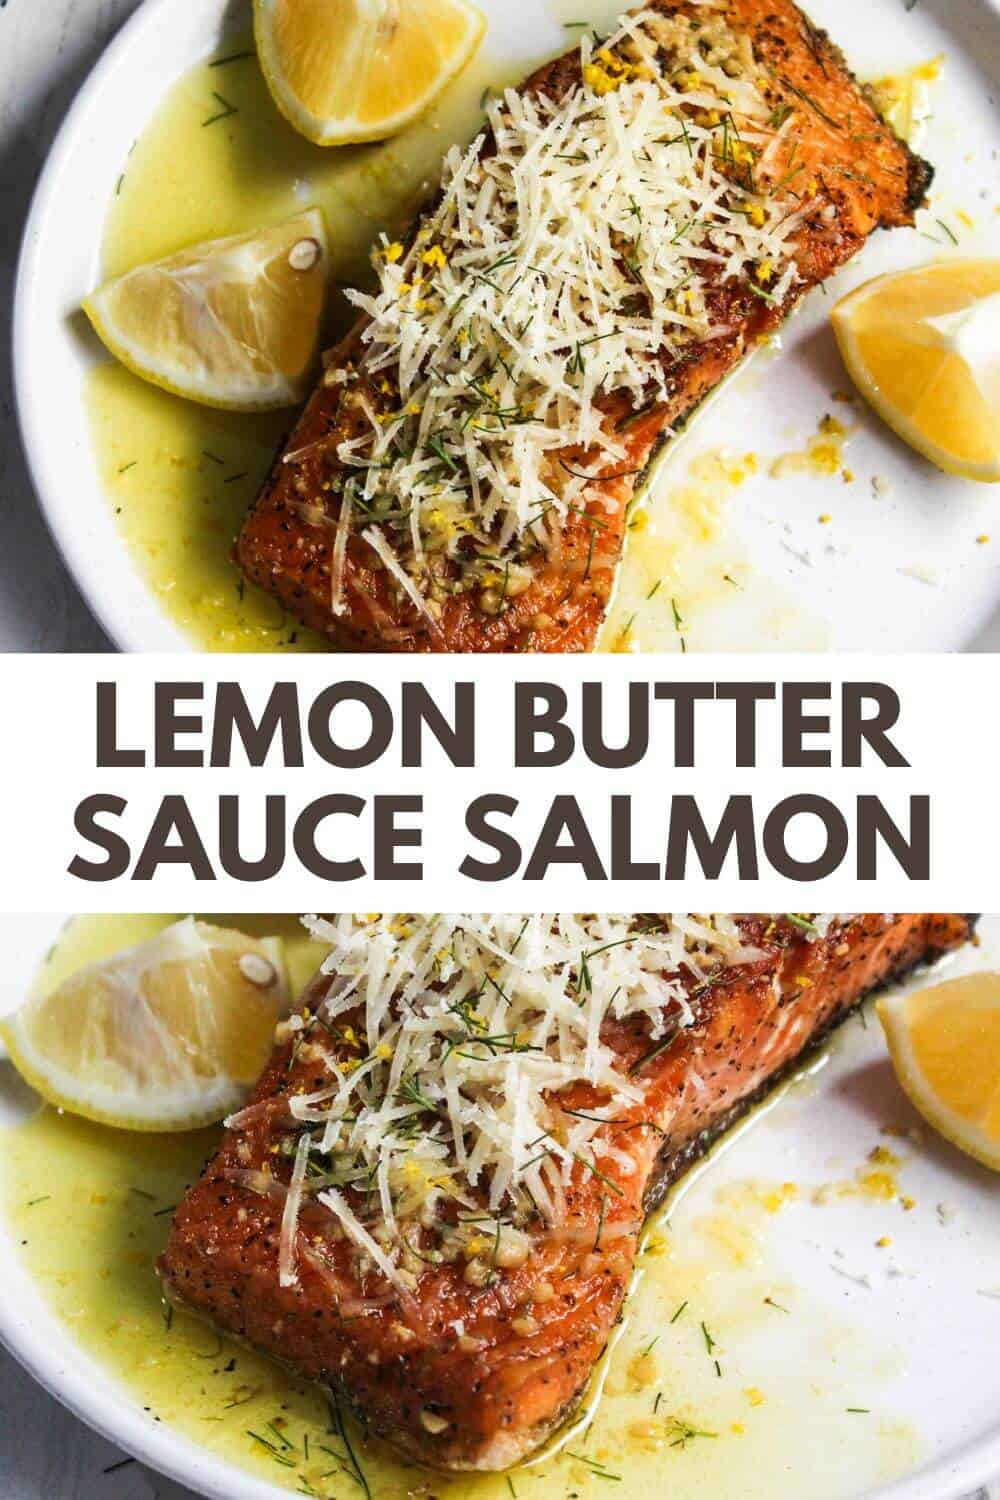 Lemon butter sauce salmon on a white plate.